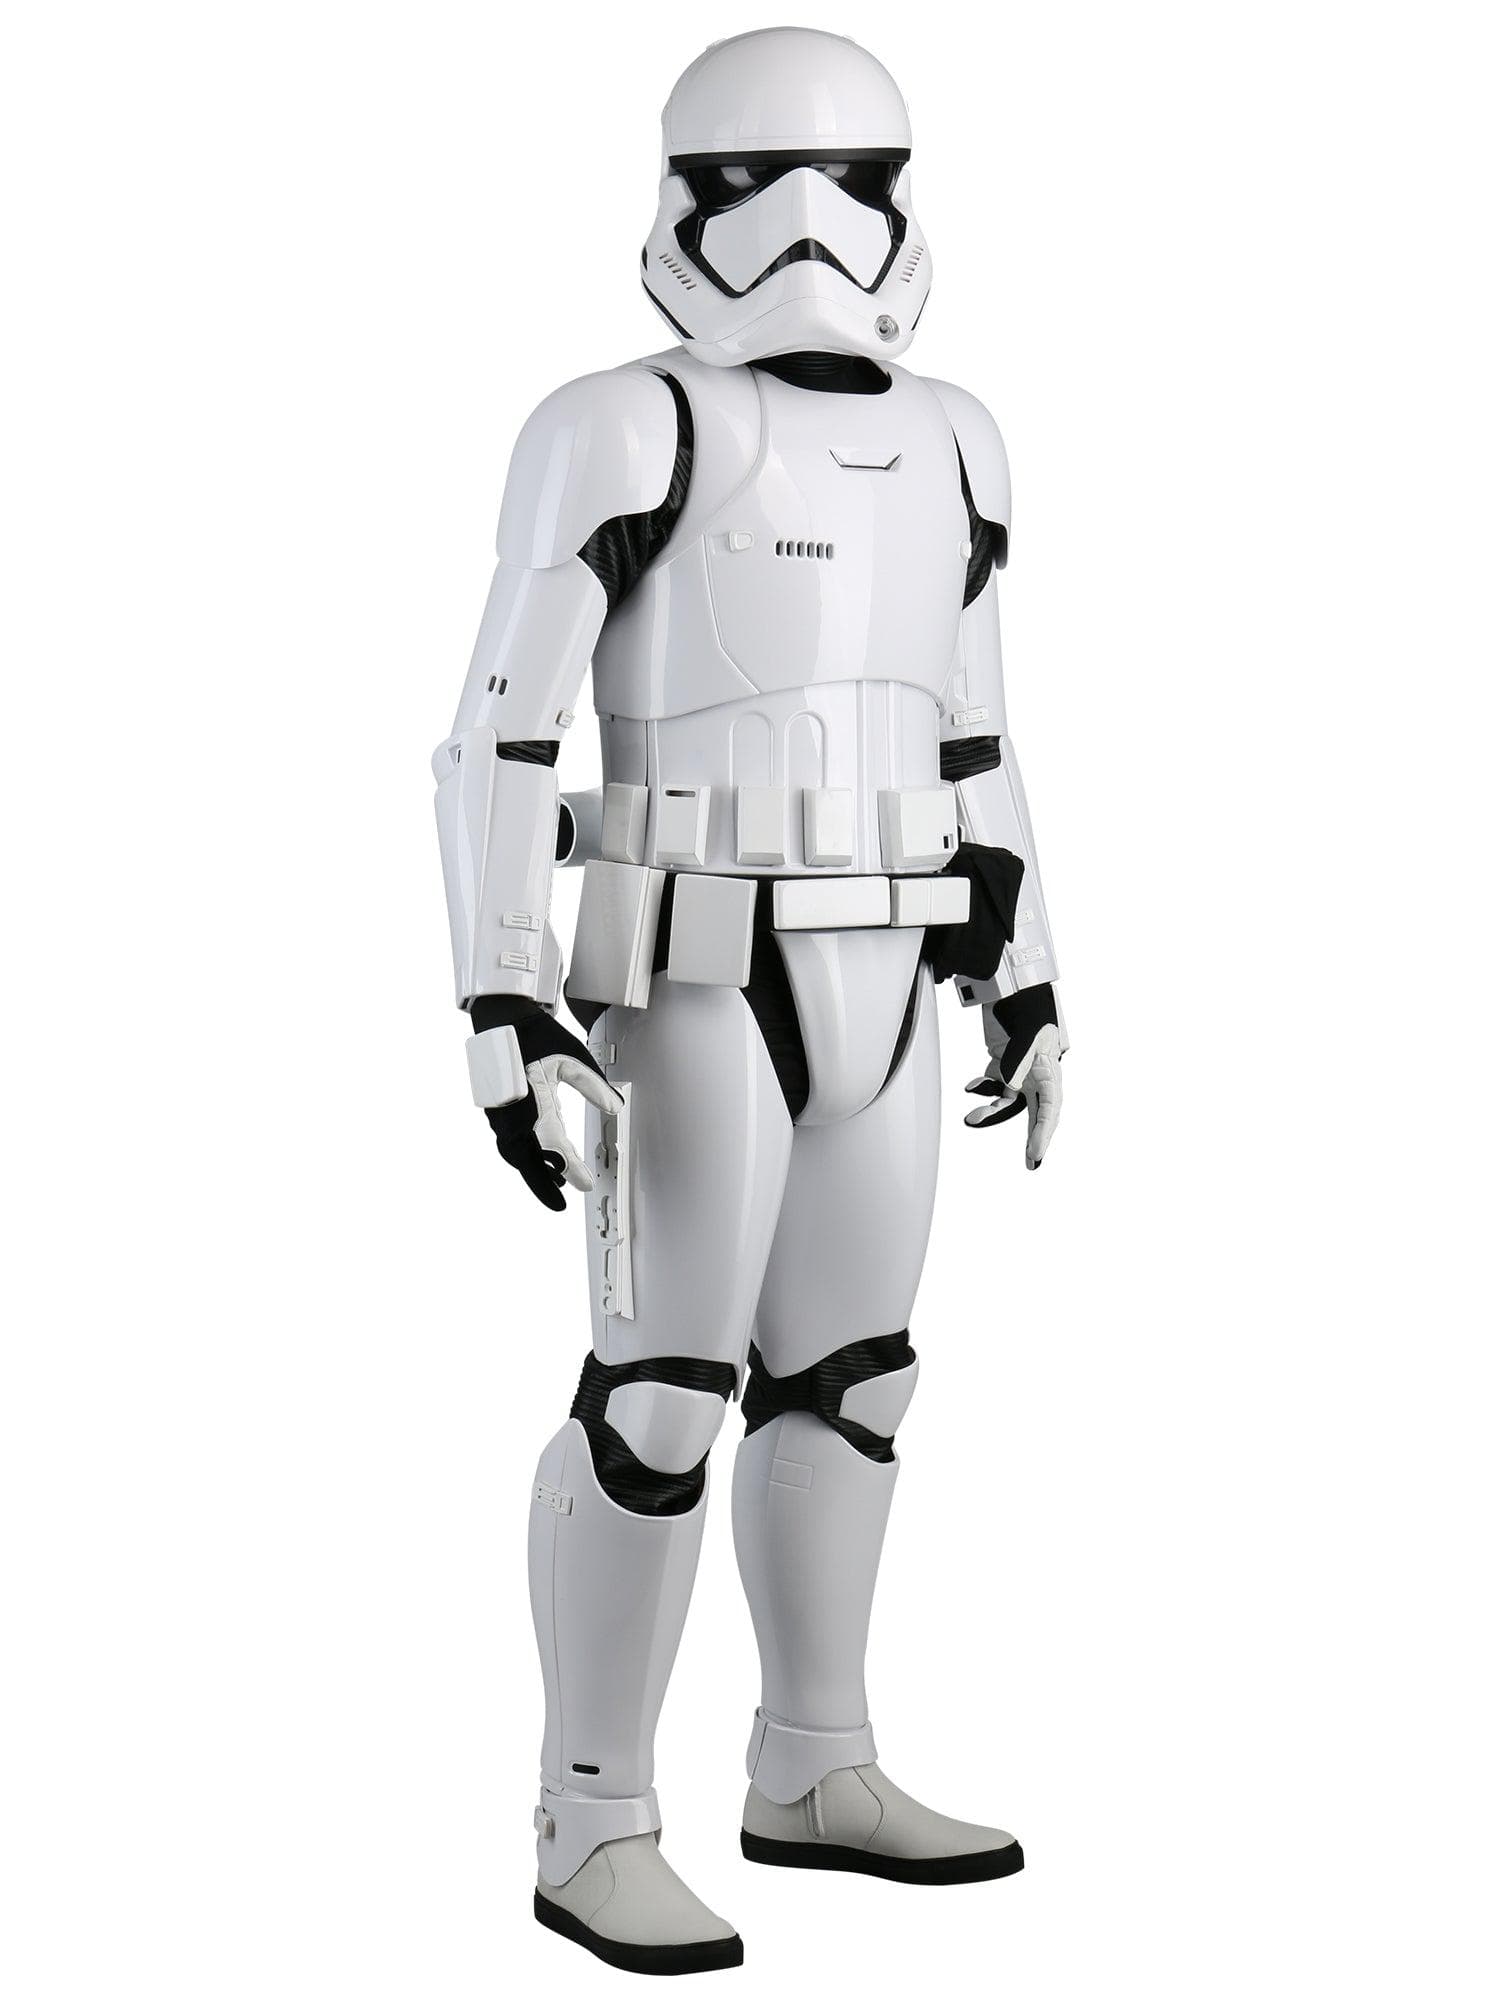 Denuo Novo Star Wars: The Force Awakens Stormtrooper Kit - costumes.com